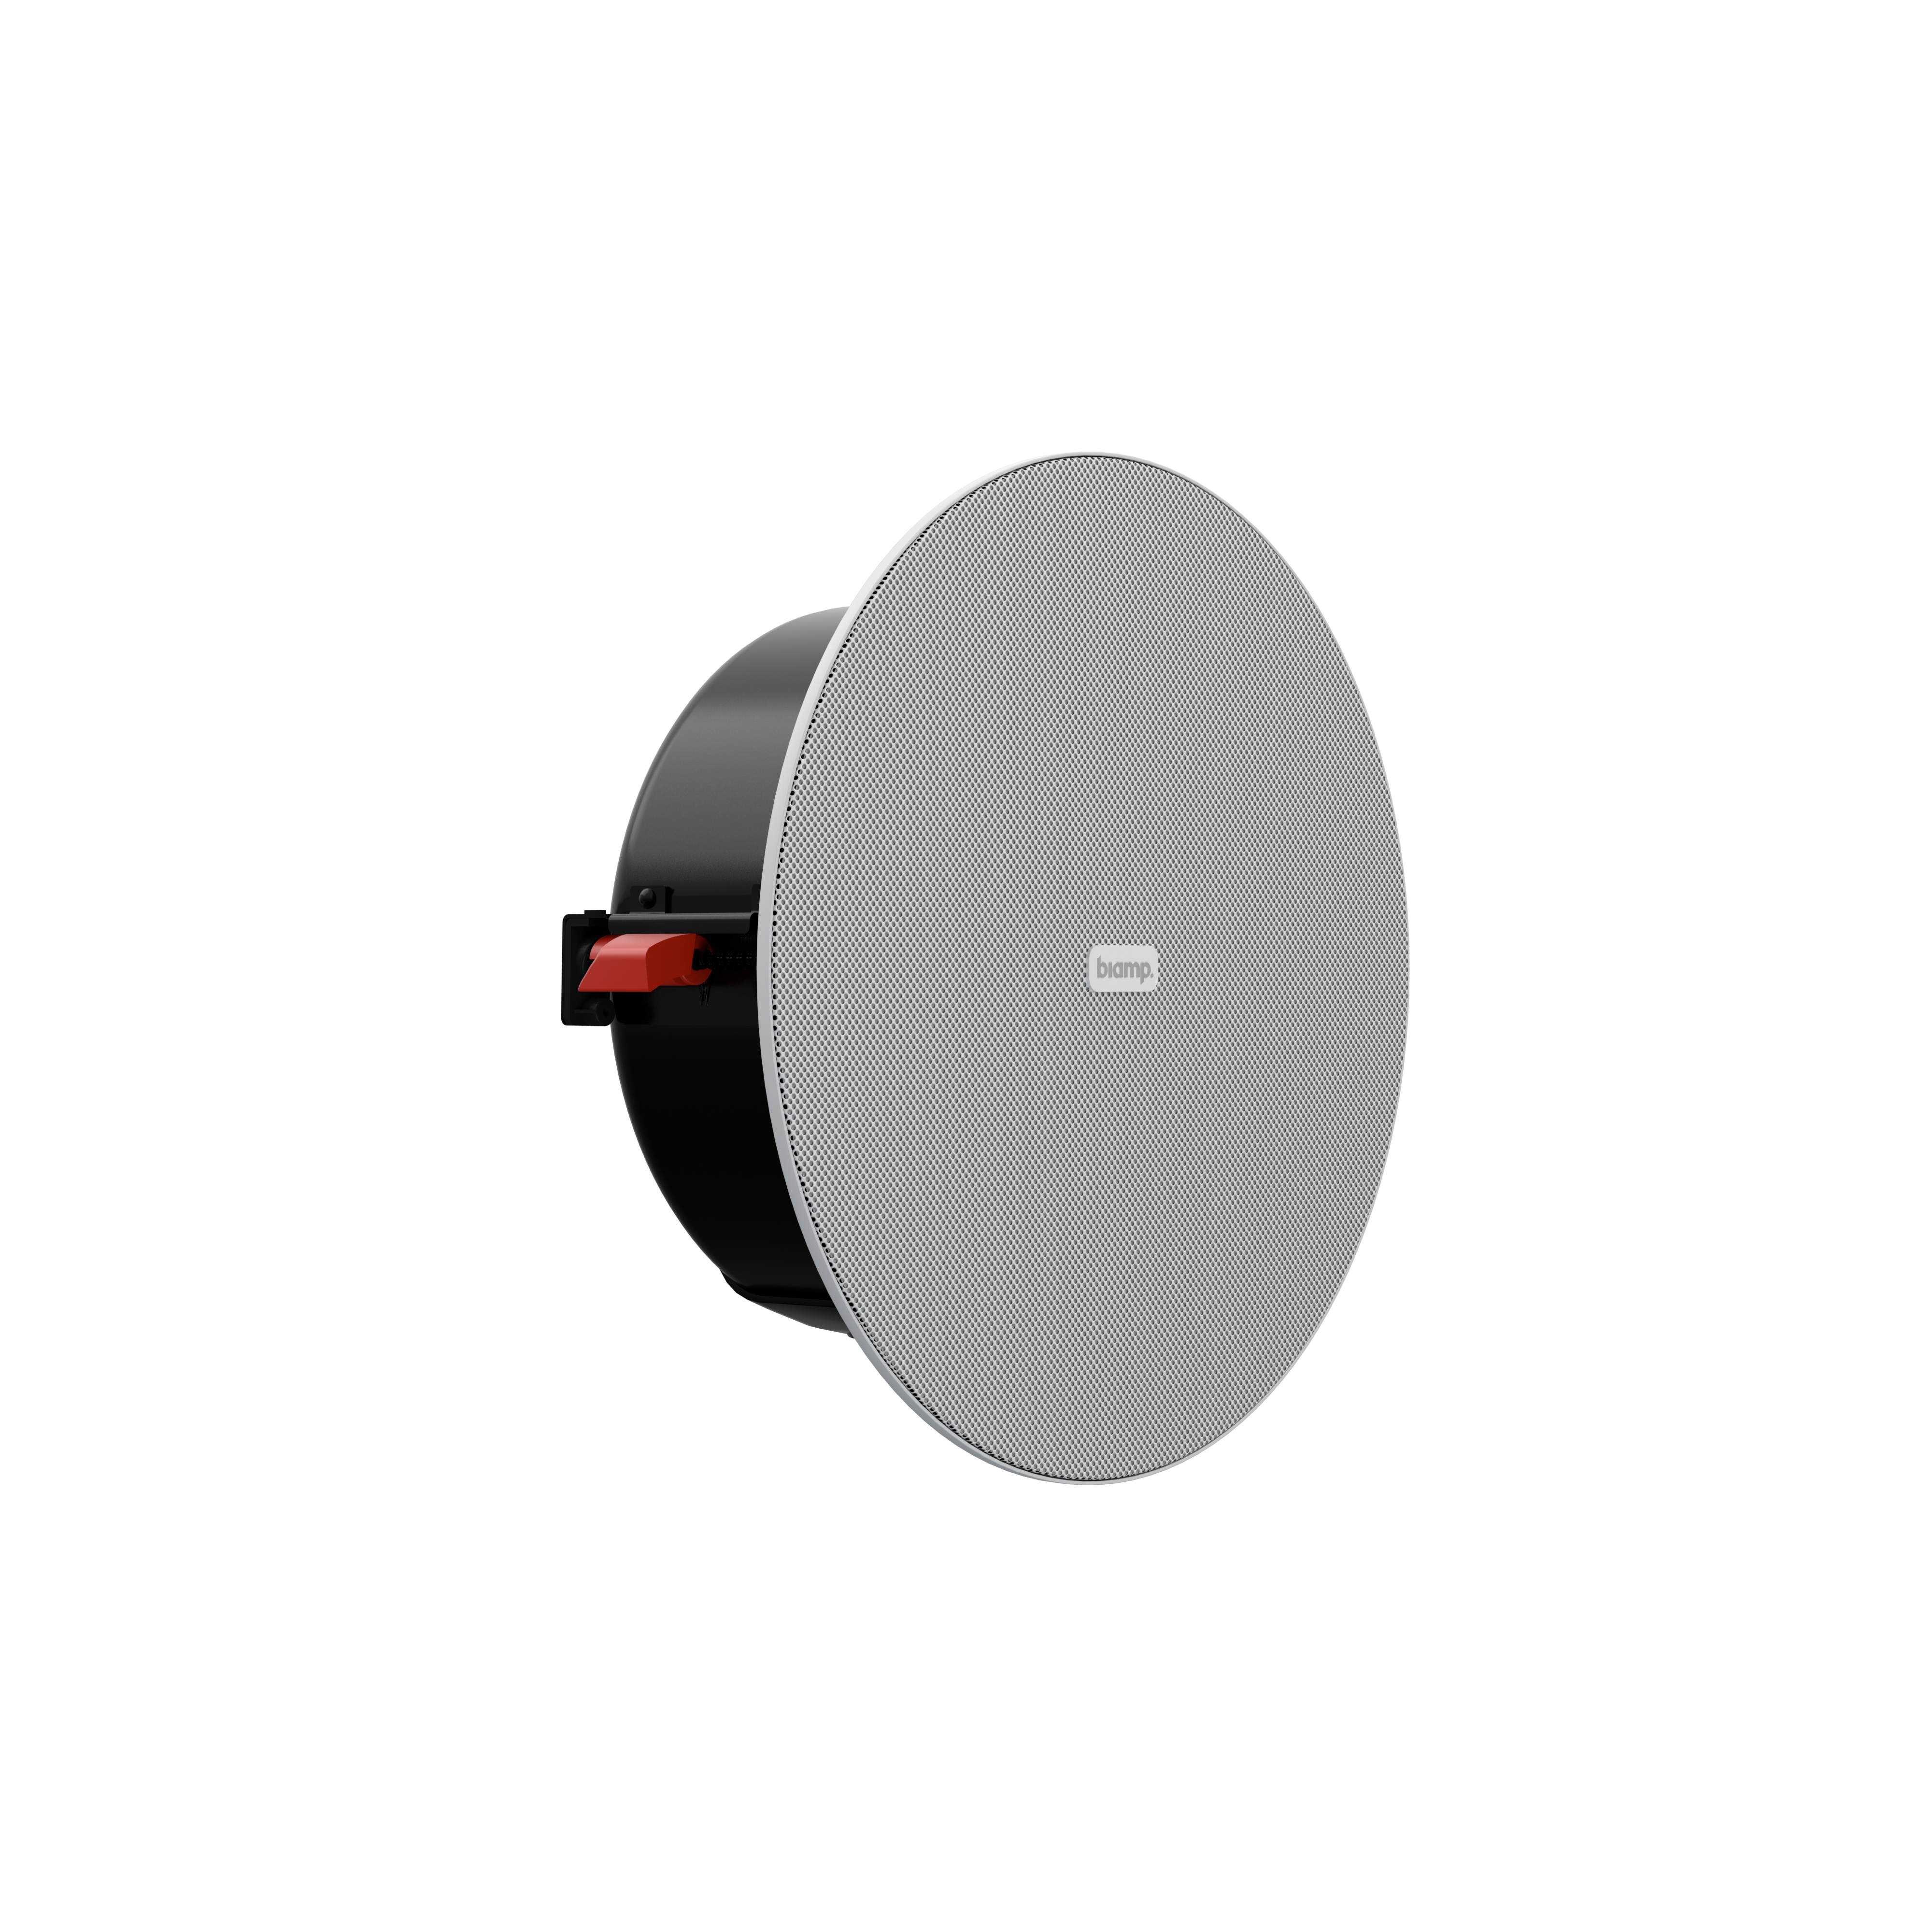 Two-way 4.5-inch 70V/100V ceiling loudspeaker (low profile)